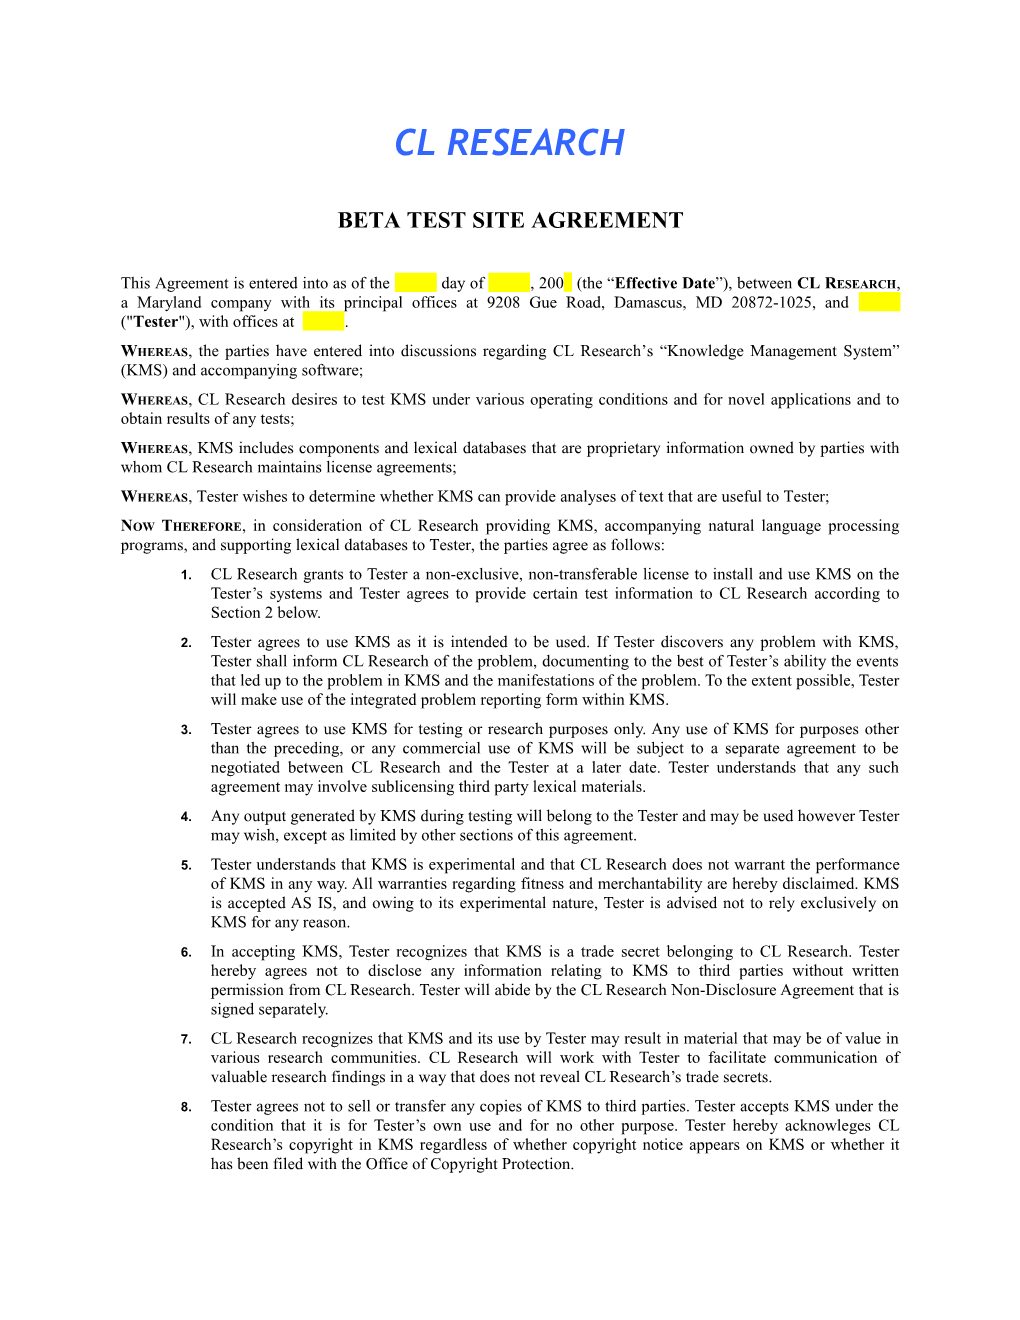 Beta Test Site Agreement